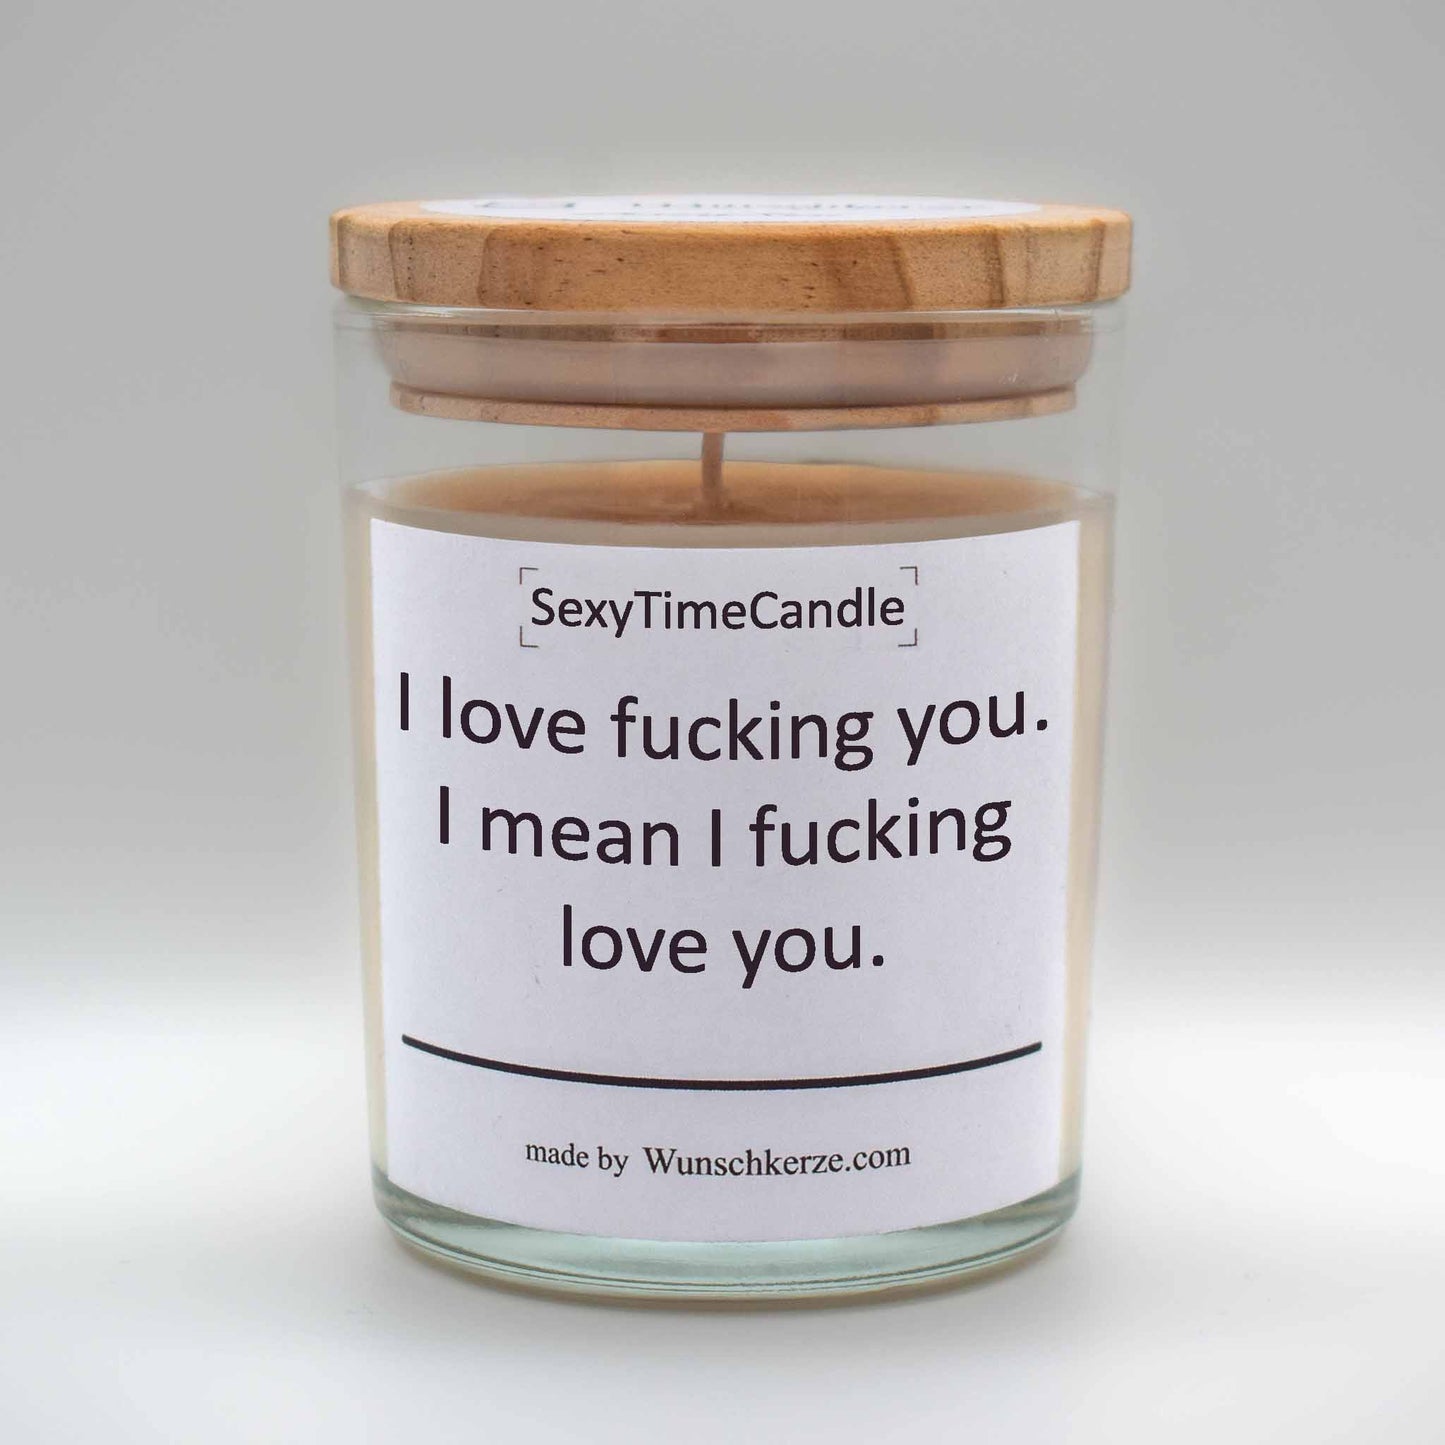 SexyTimeCandle - I love fucking you. I mean I fucking love you.